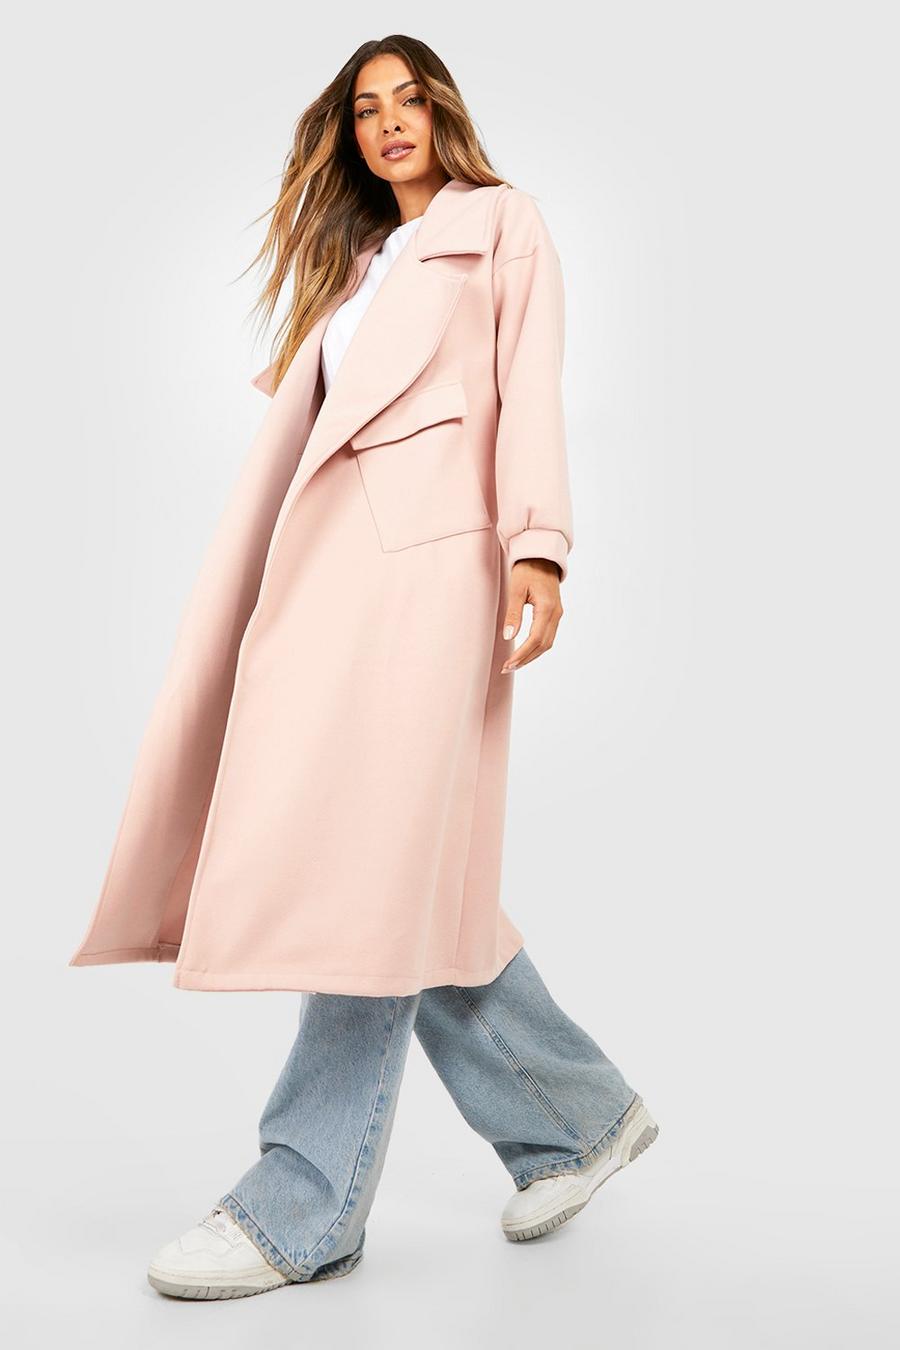 Blush pink Wool Look Super Oversized Maxi Coat